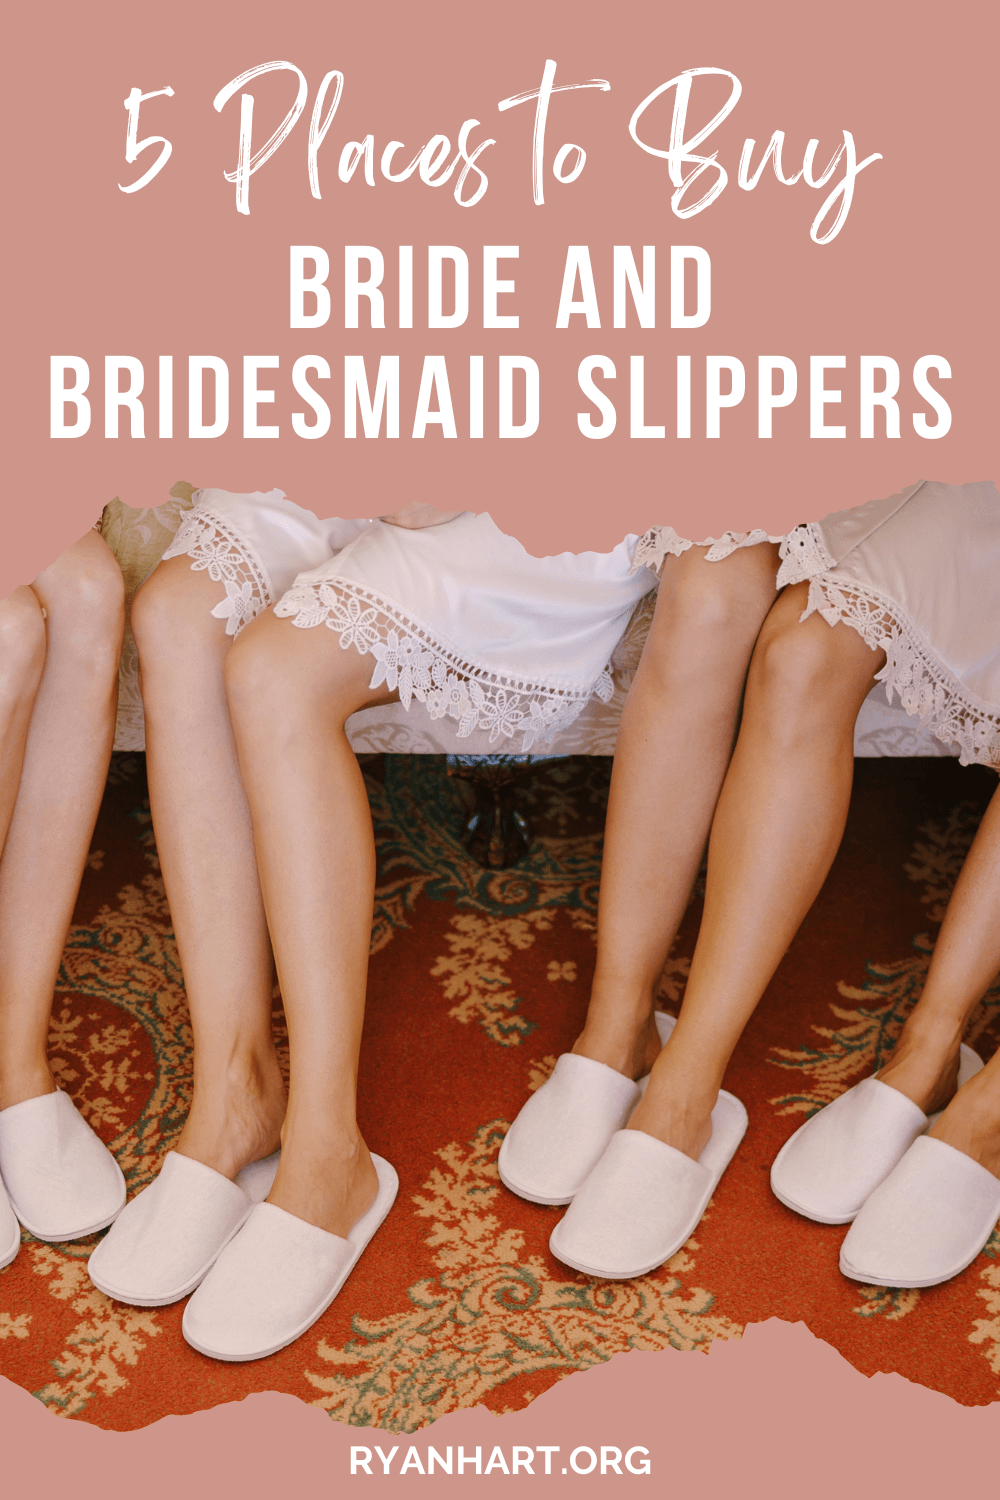 Bridesmaids wearing slippers